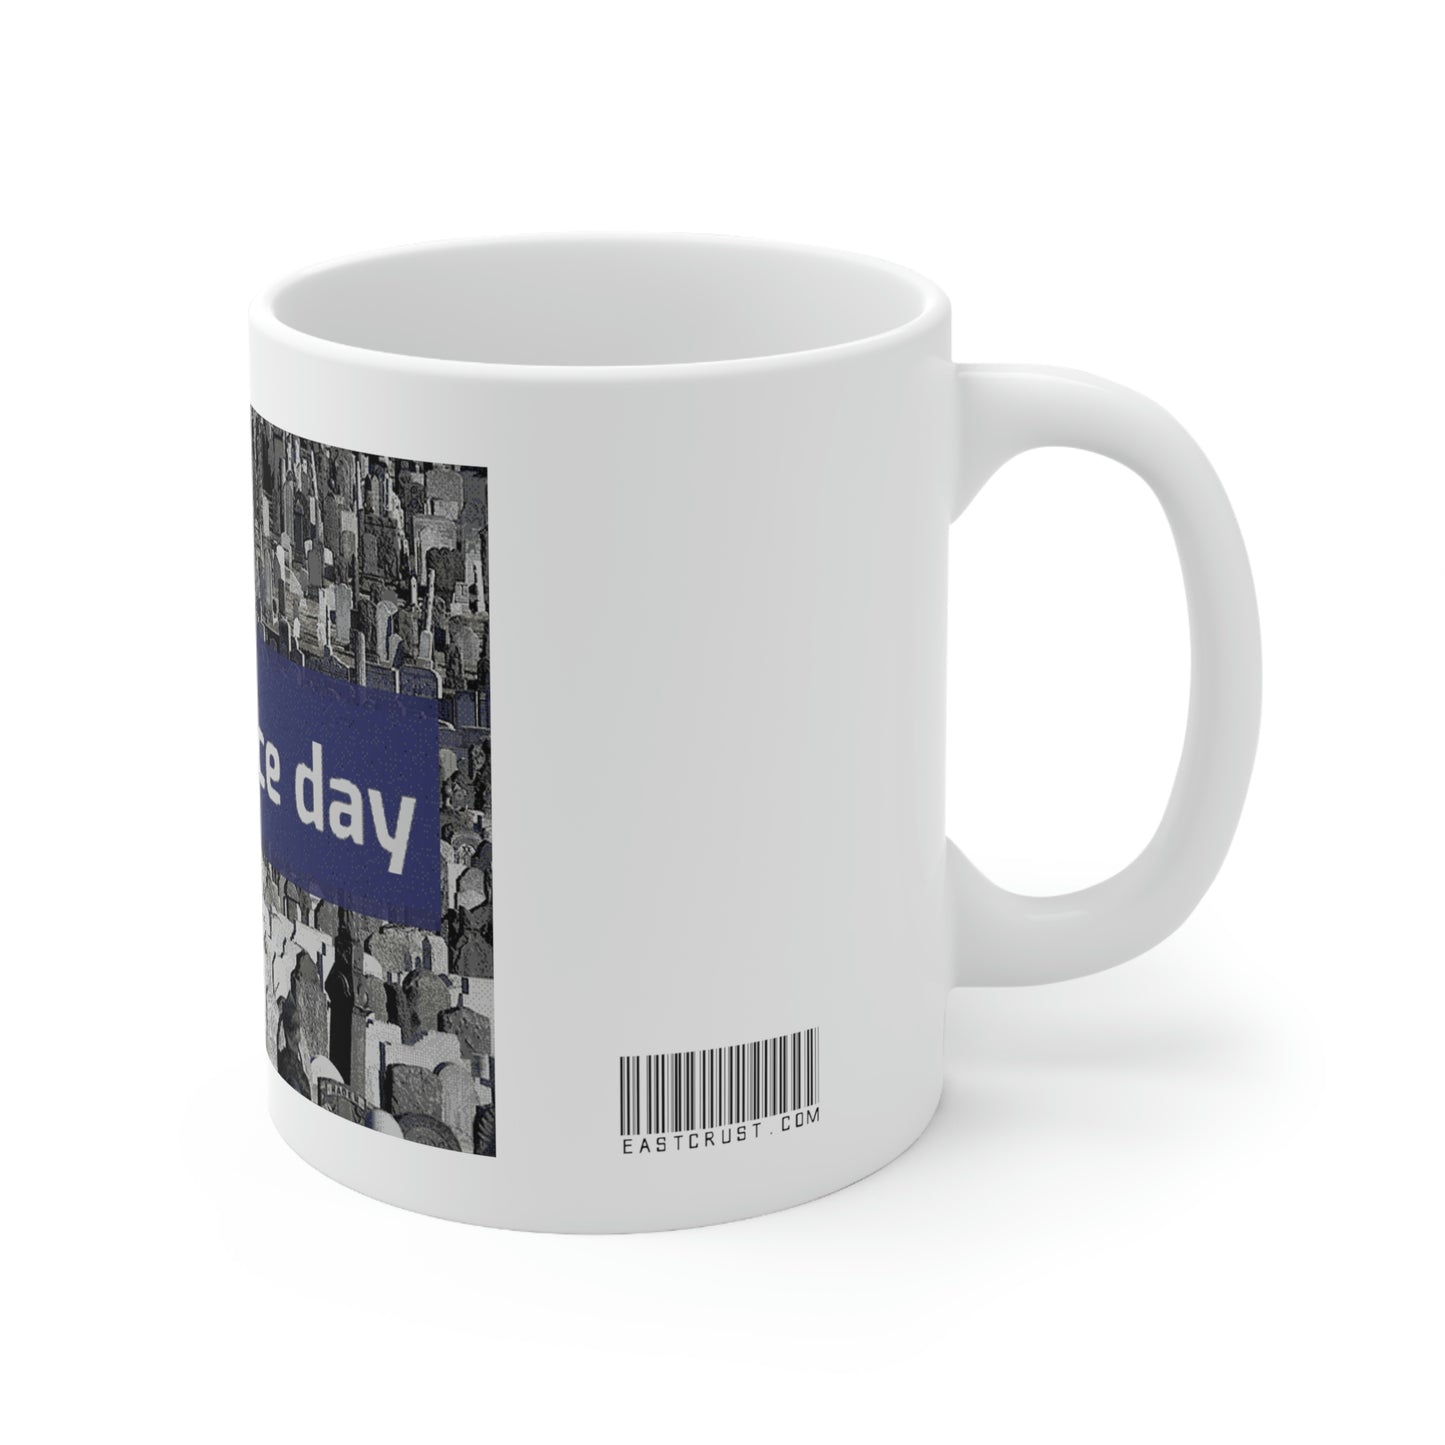 Have a nice day - Grave Book - Ceramic Mug 11oz